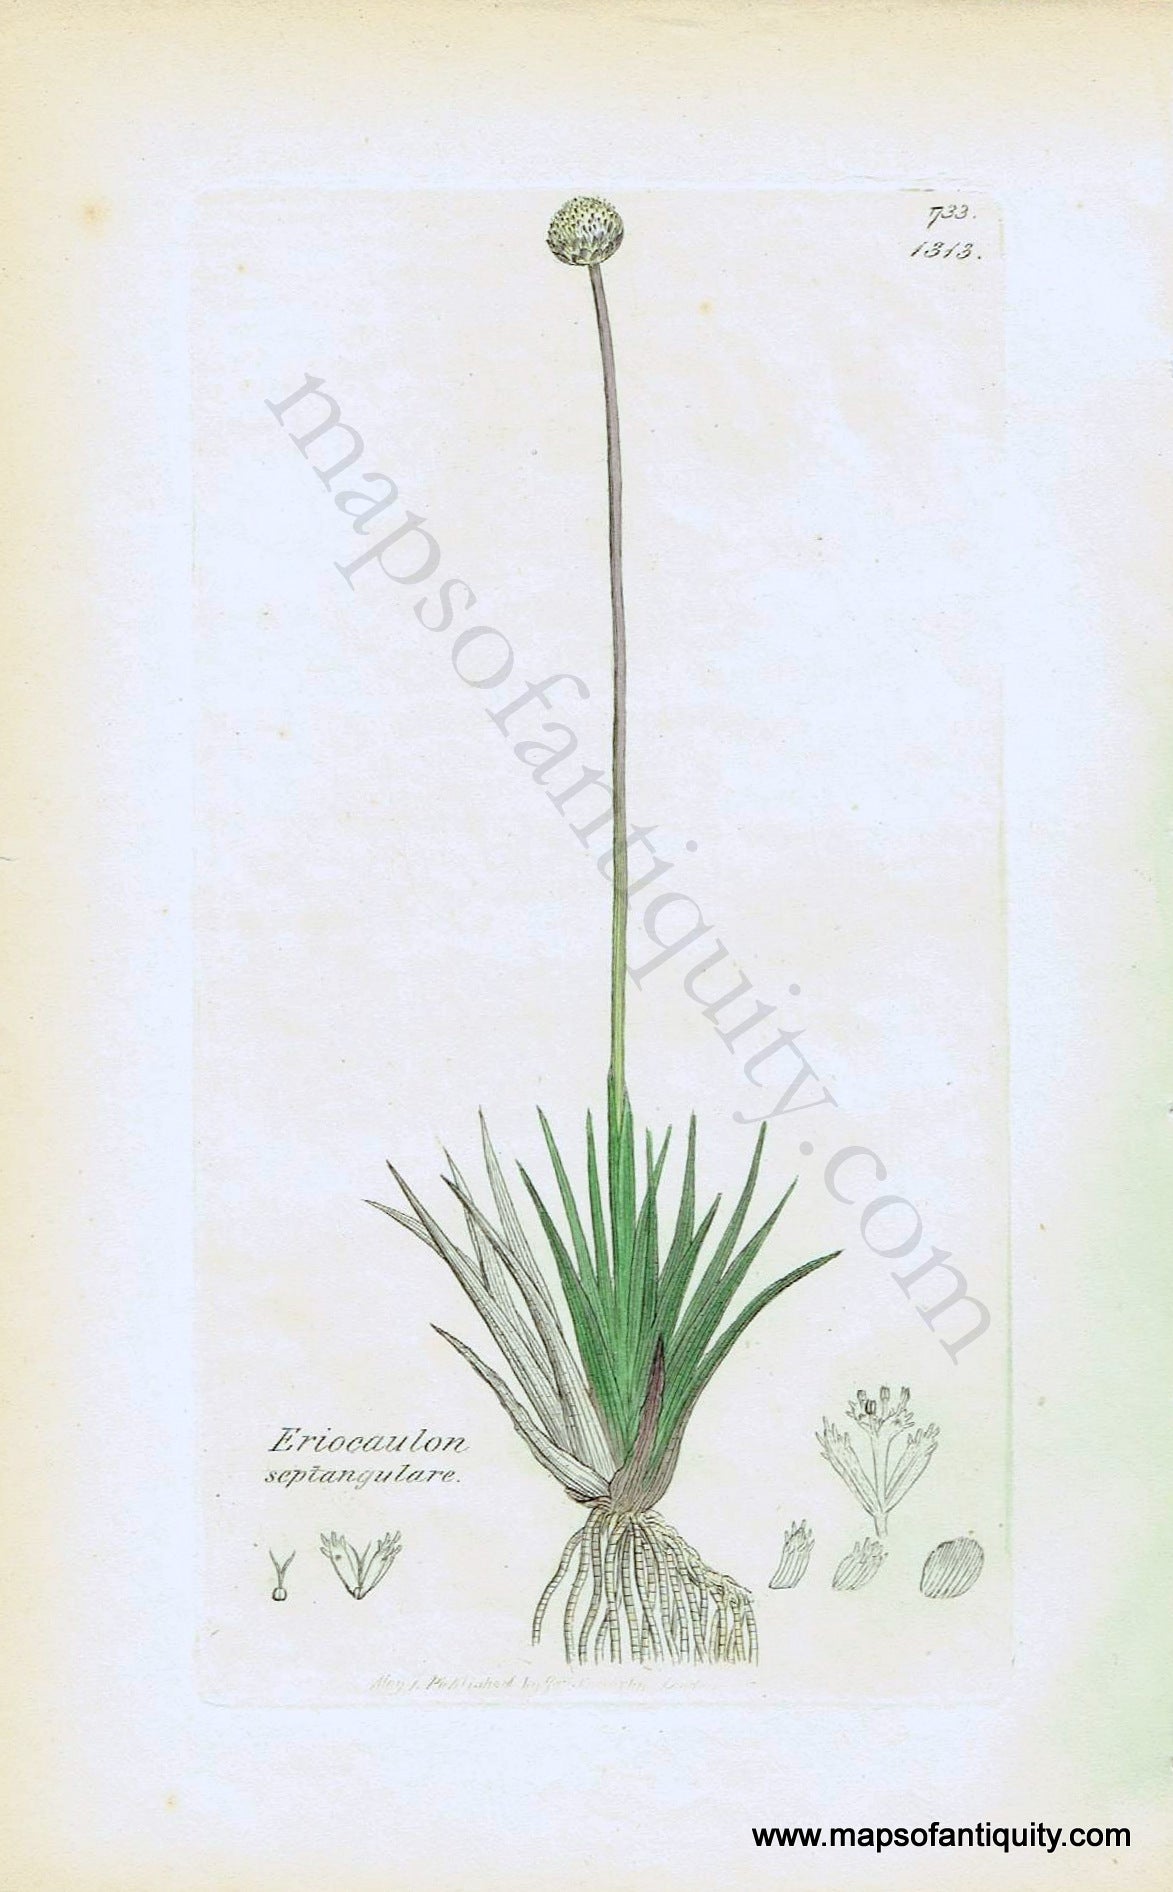 Antique-Hand-Colored-Print-Eriocaulon-septangulare-c.-1820-Sowerby-Botanical-1800s-19th-century-Maps-of-Antiquity